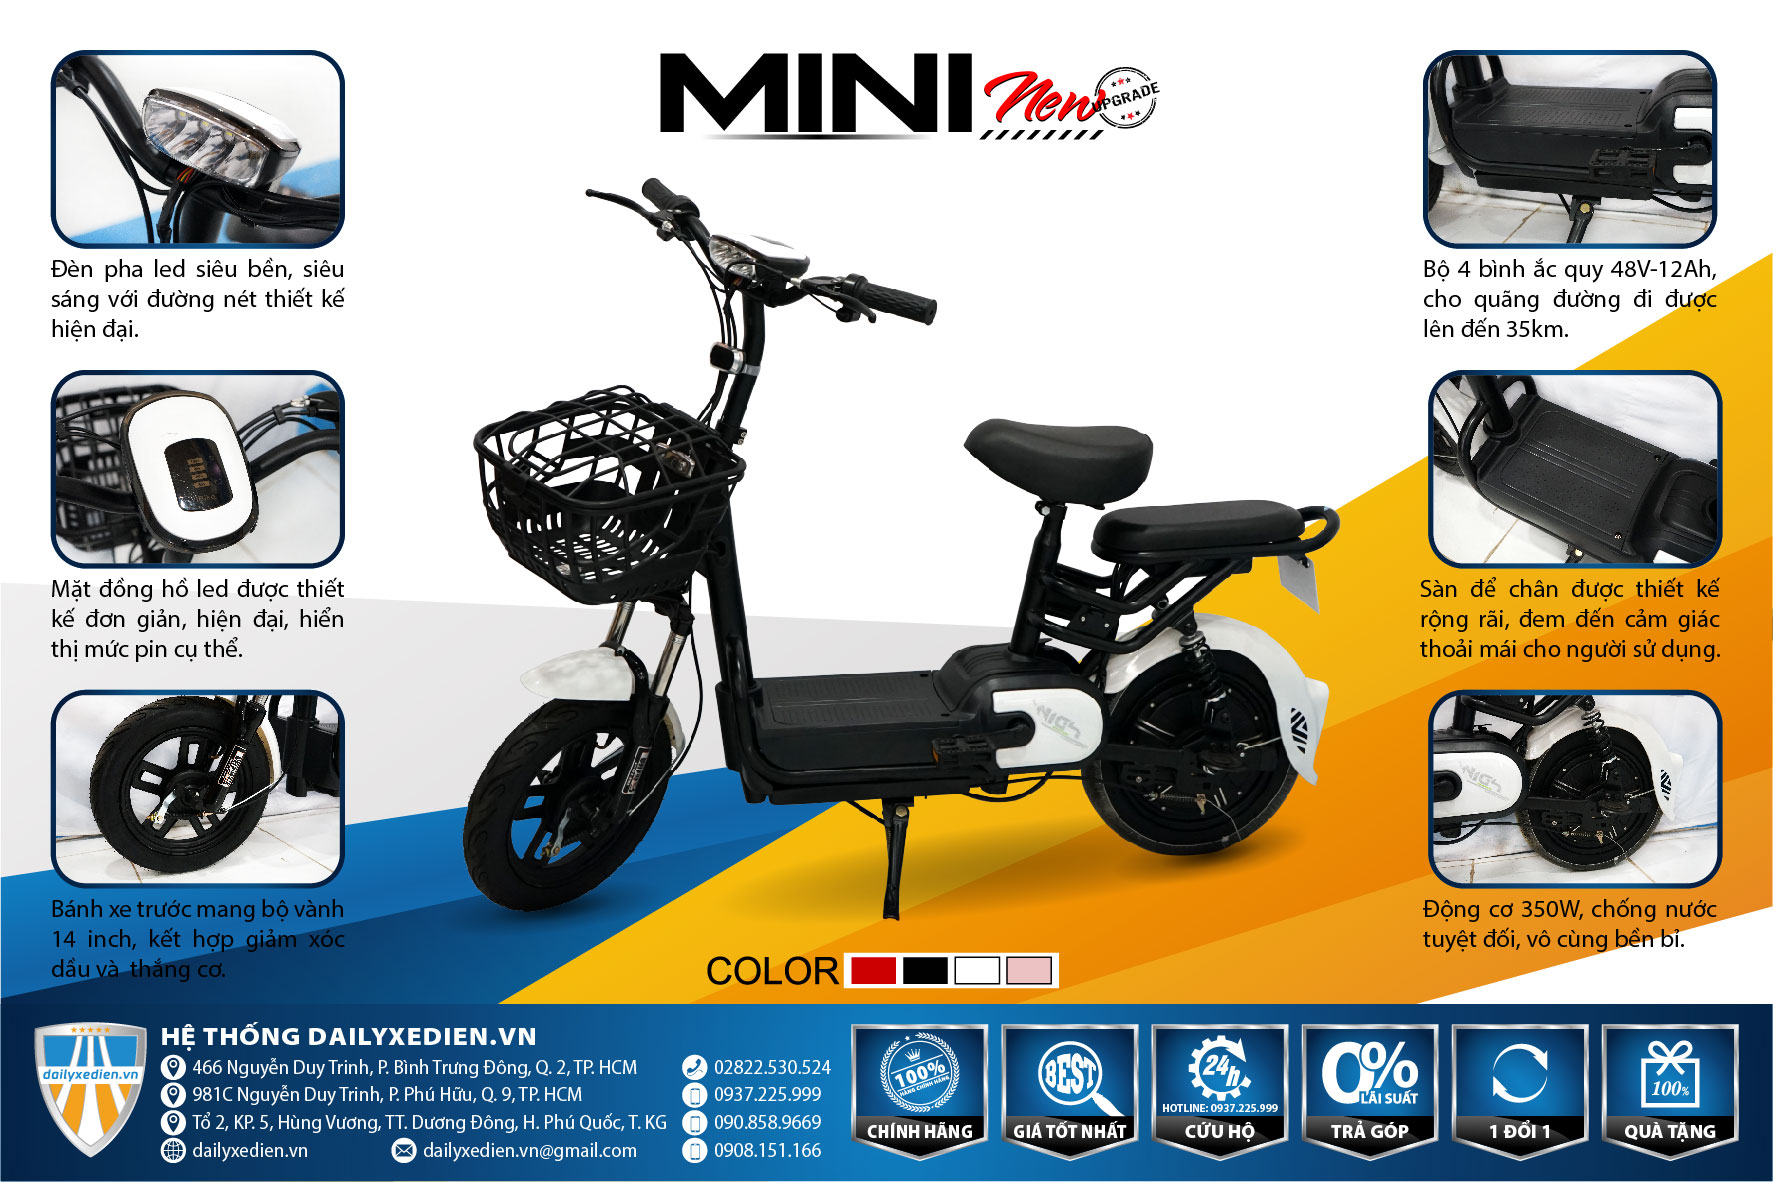 xe dap dien mini new 2021 tt 01 - Xe đạp điện mini new 2021